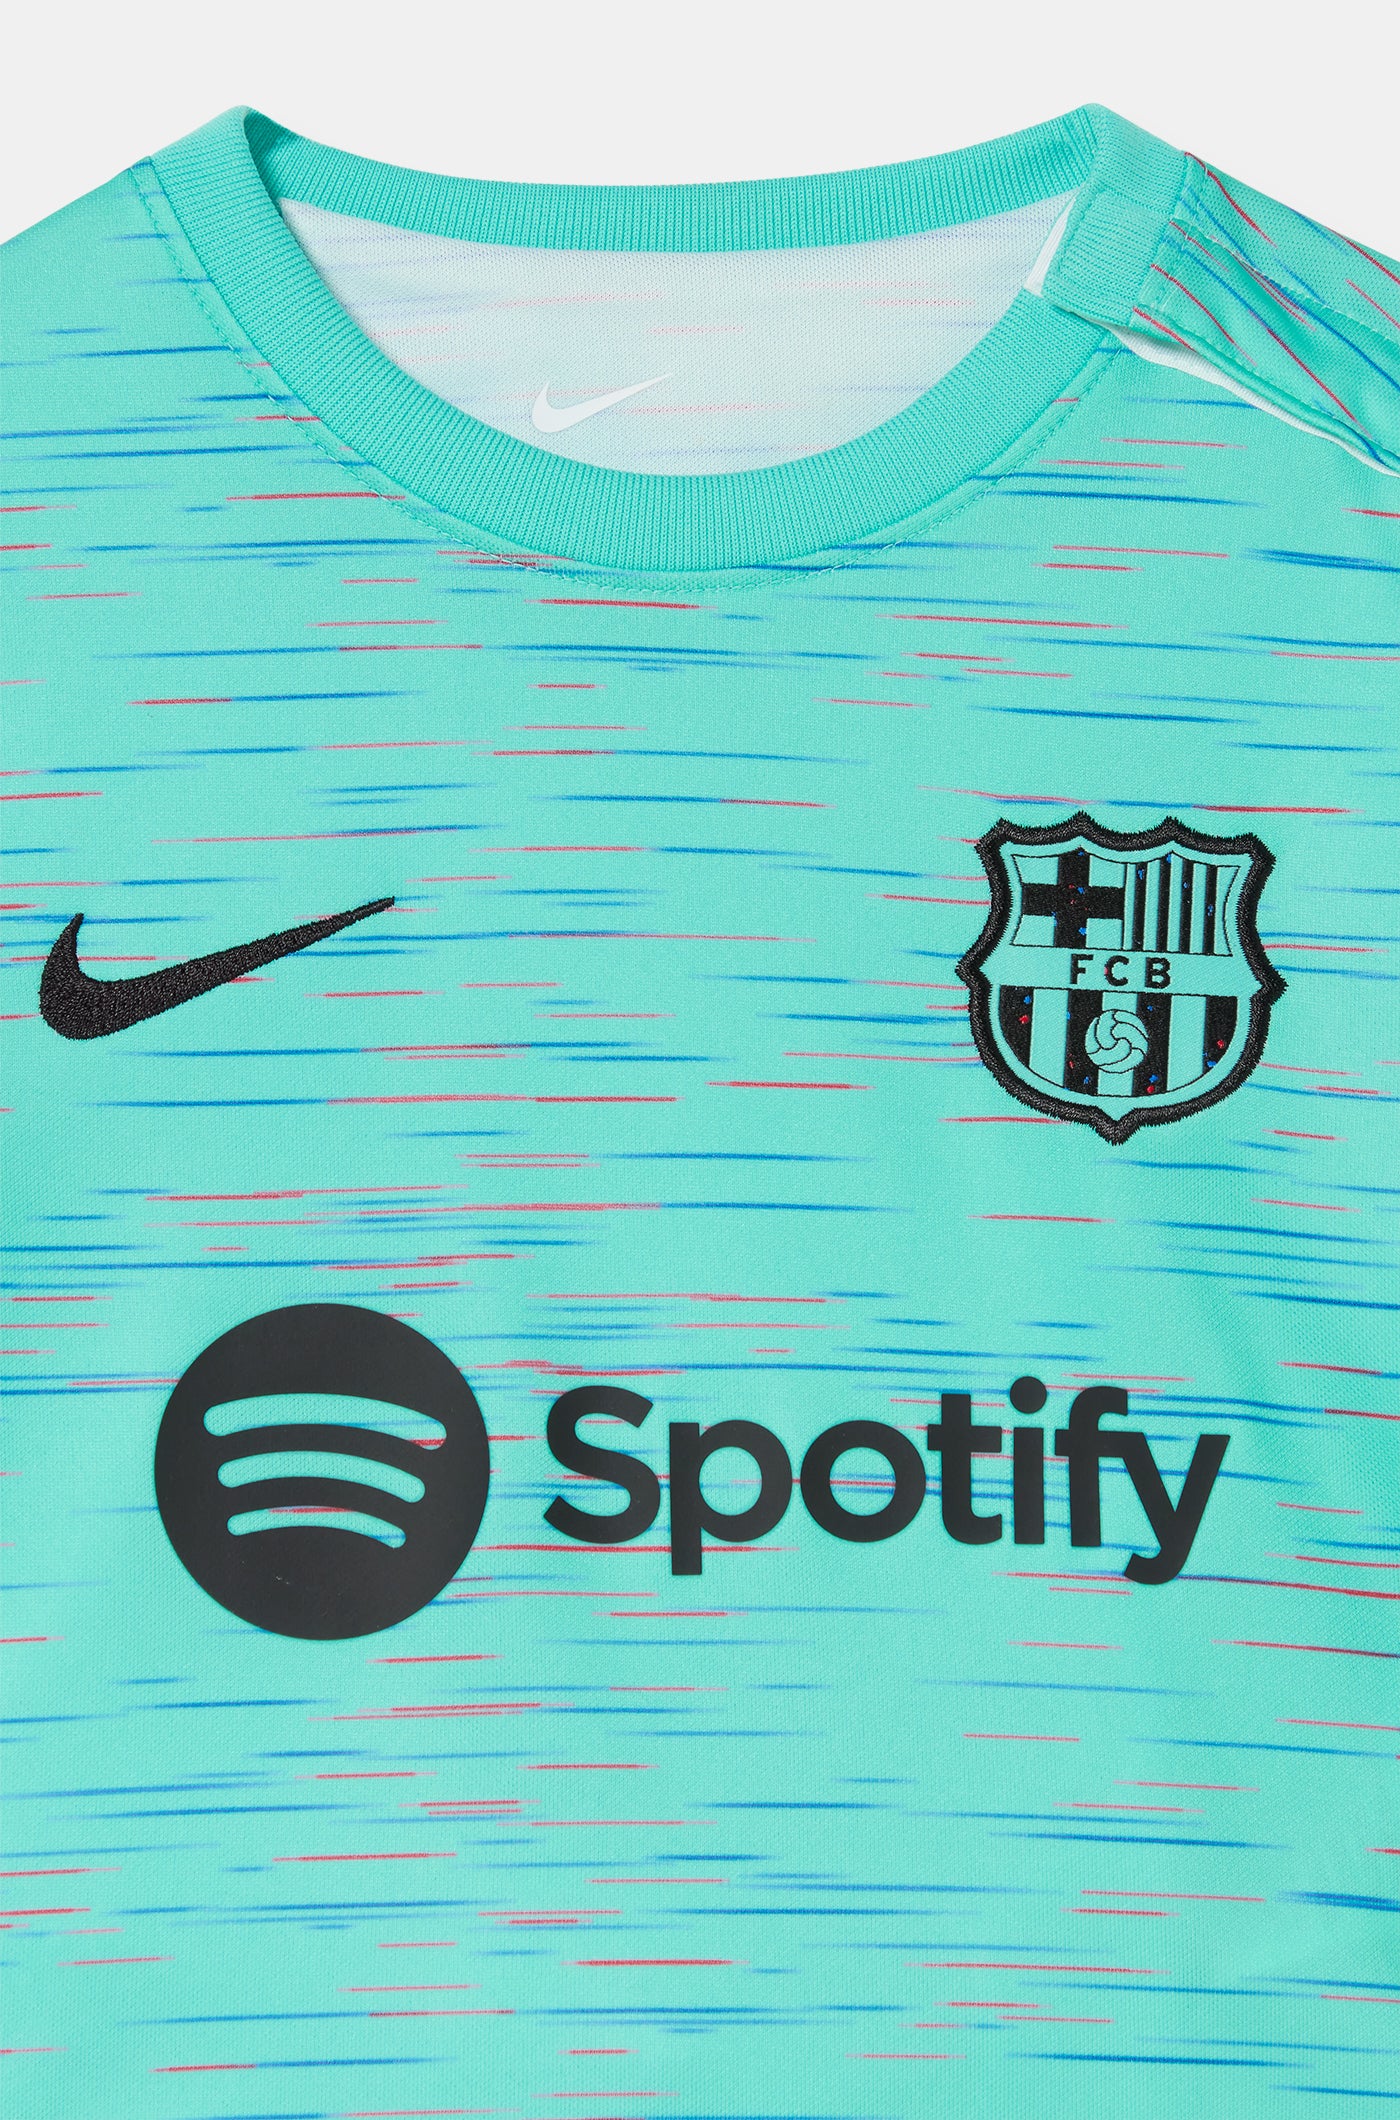 Kids Third Kit – Barça Official Store Spotify Camp Nou